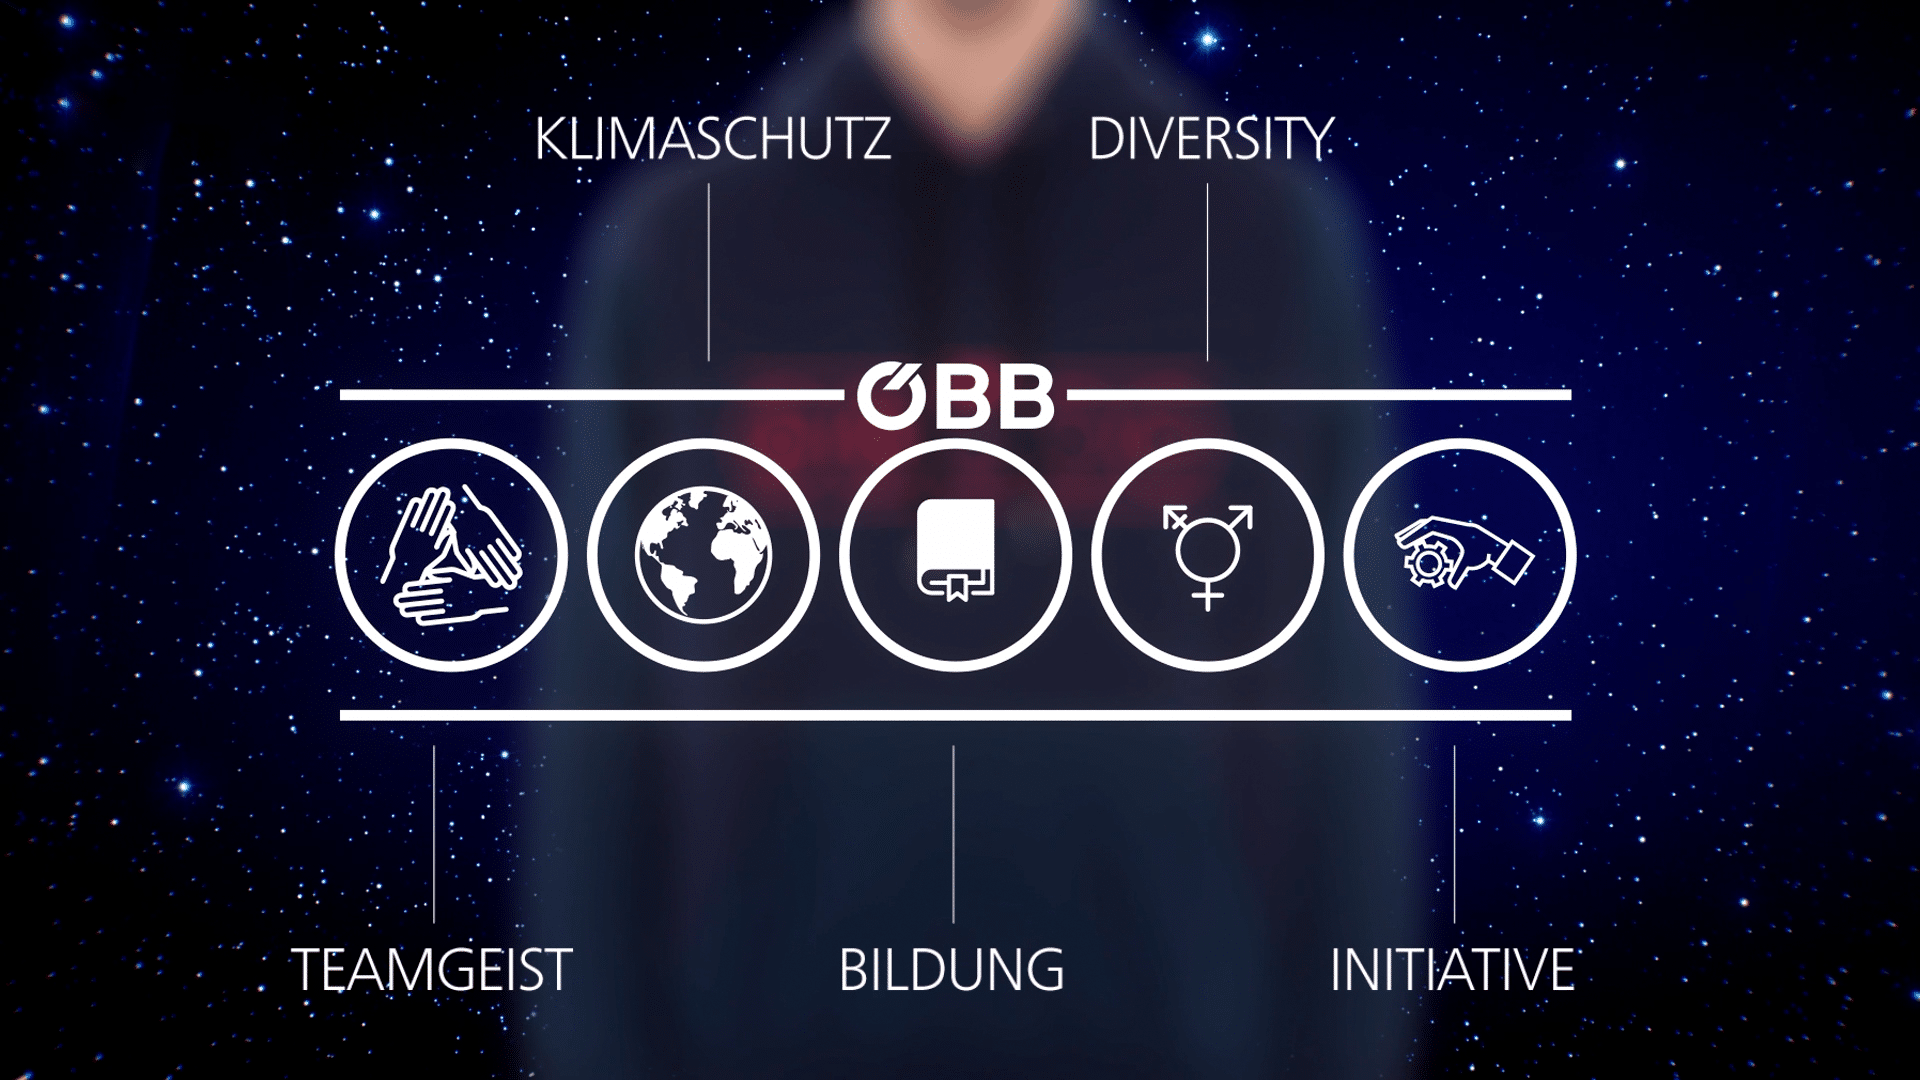 OEBB_Lehrlinge_Diversity-Charta_16x9